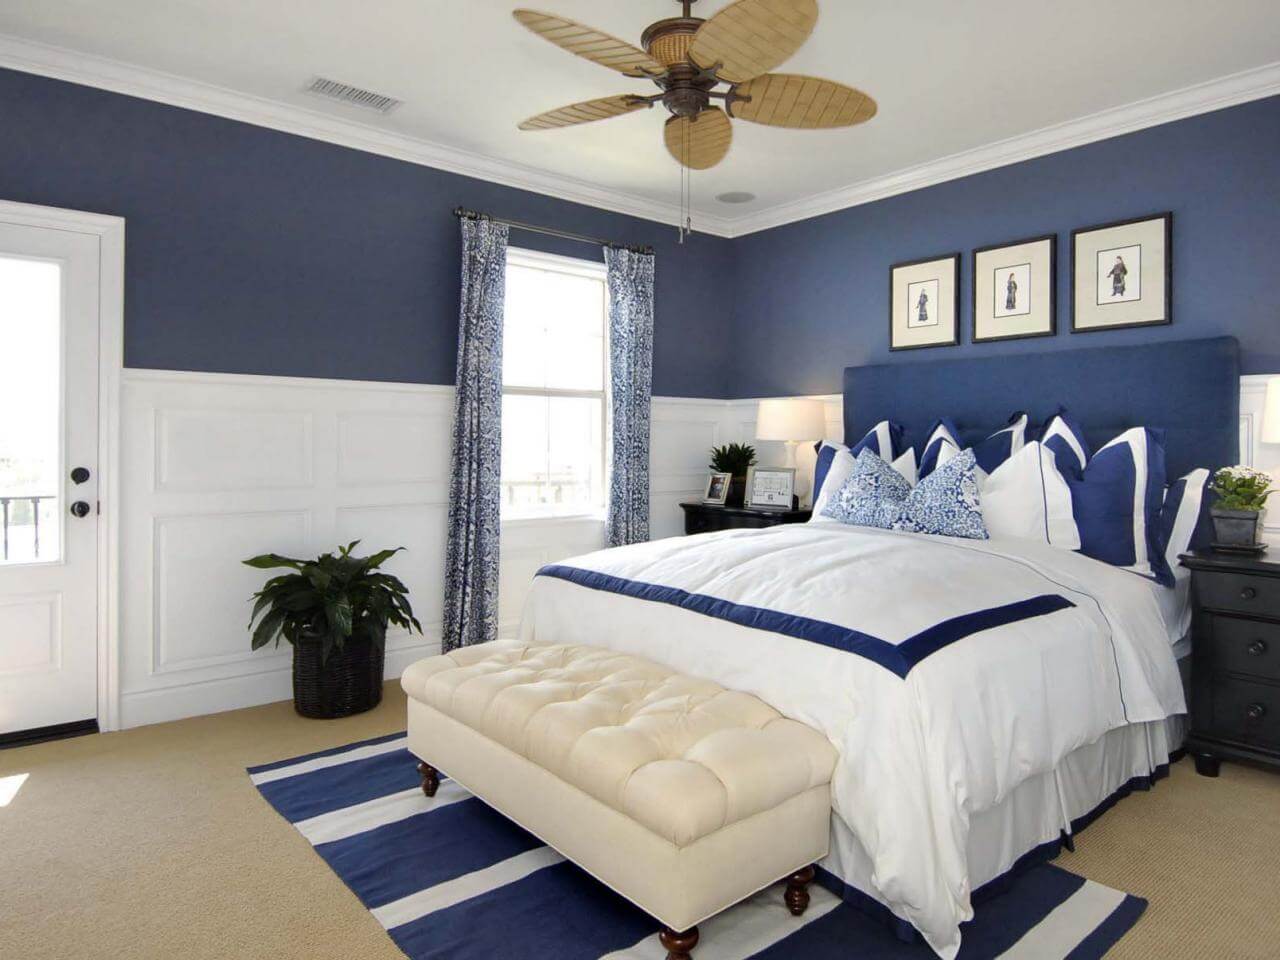 Wonderful blue bedroom